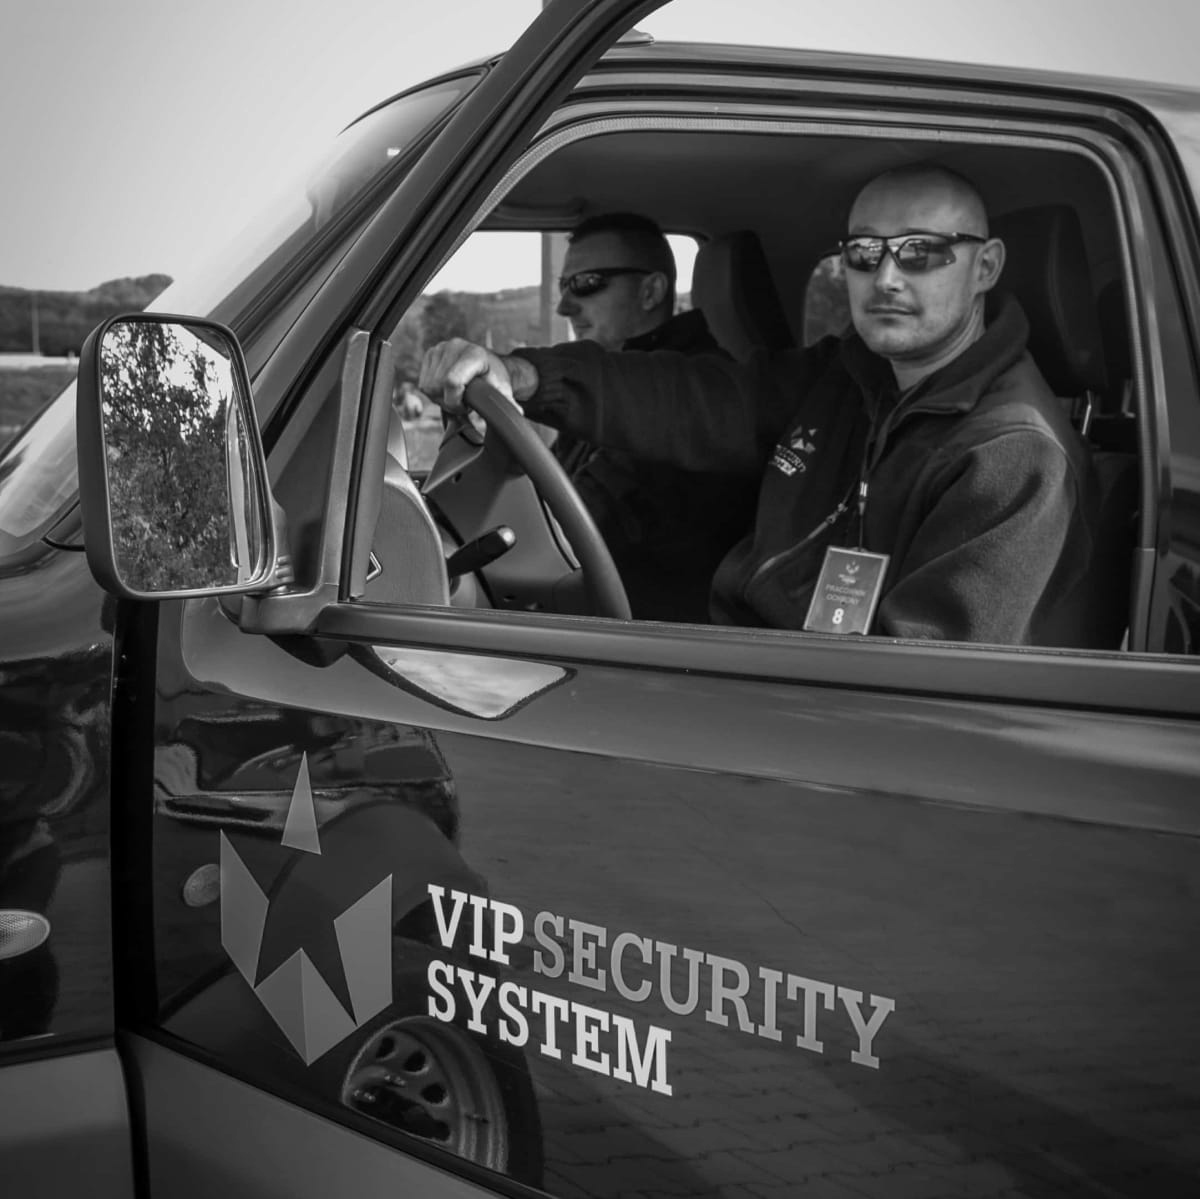 VIP Security System agencja ochrony osób i mienia 13 kwadrat